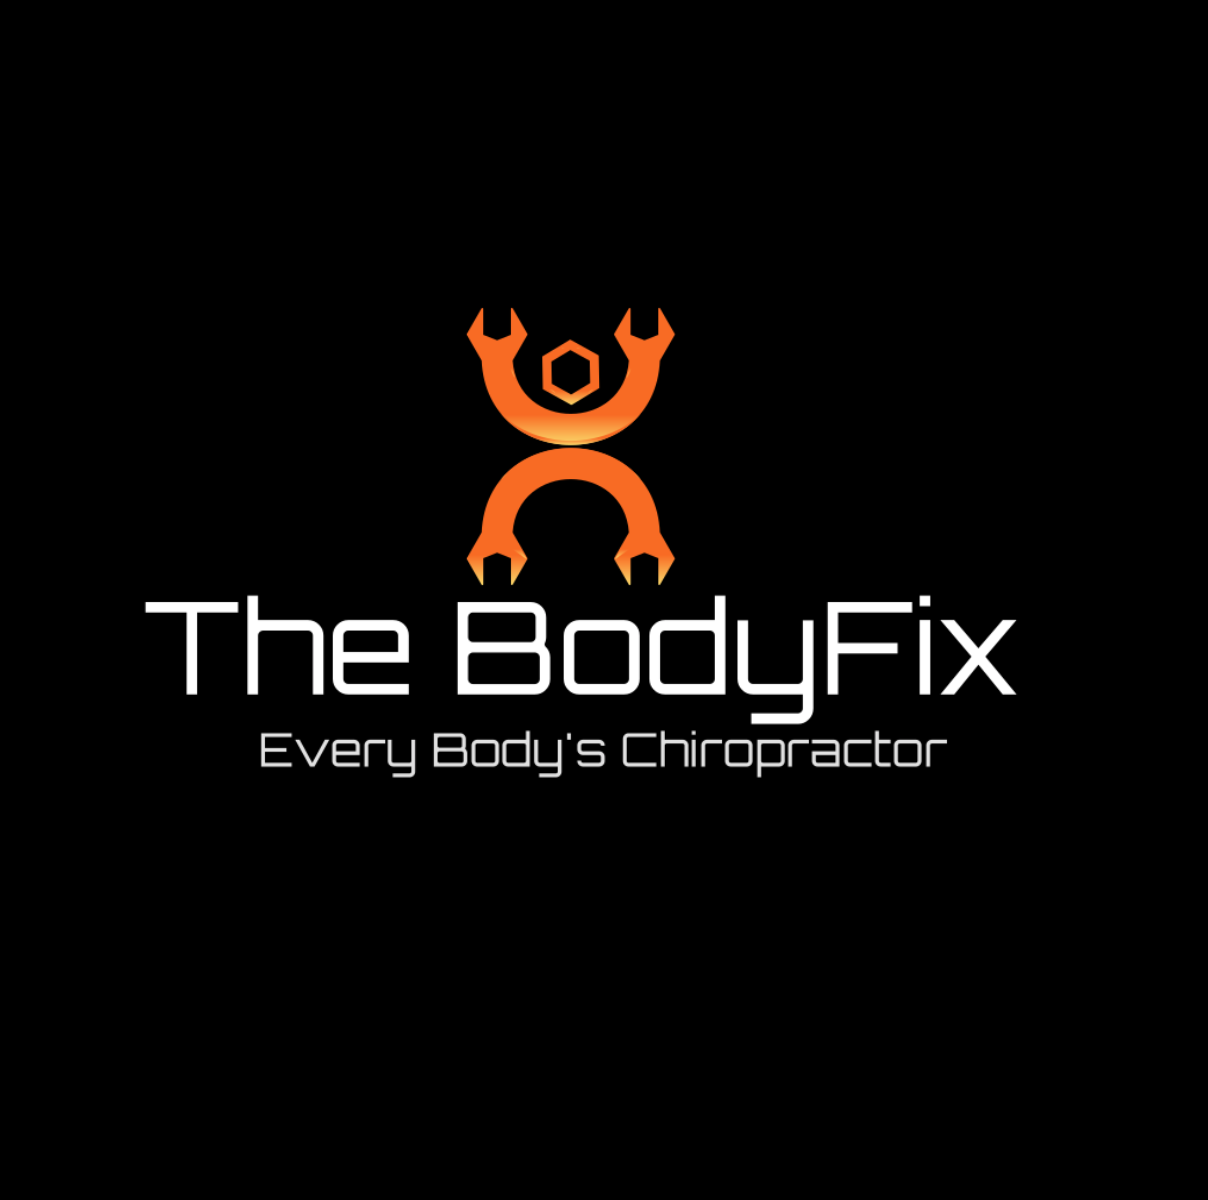 The BodyFix